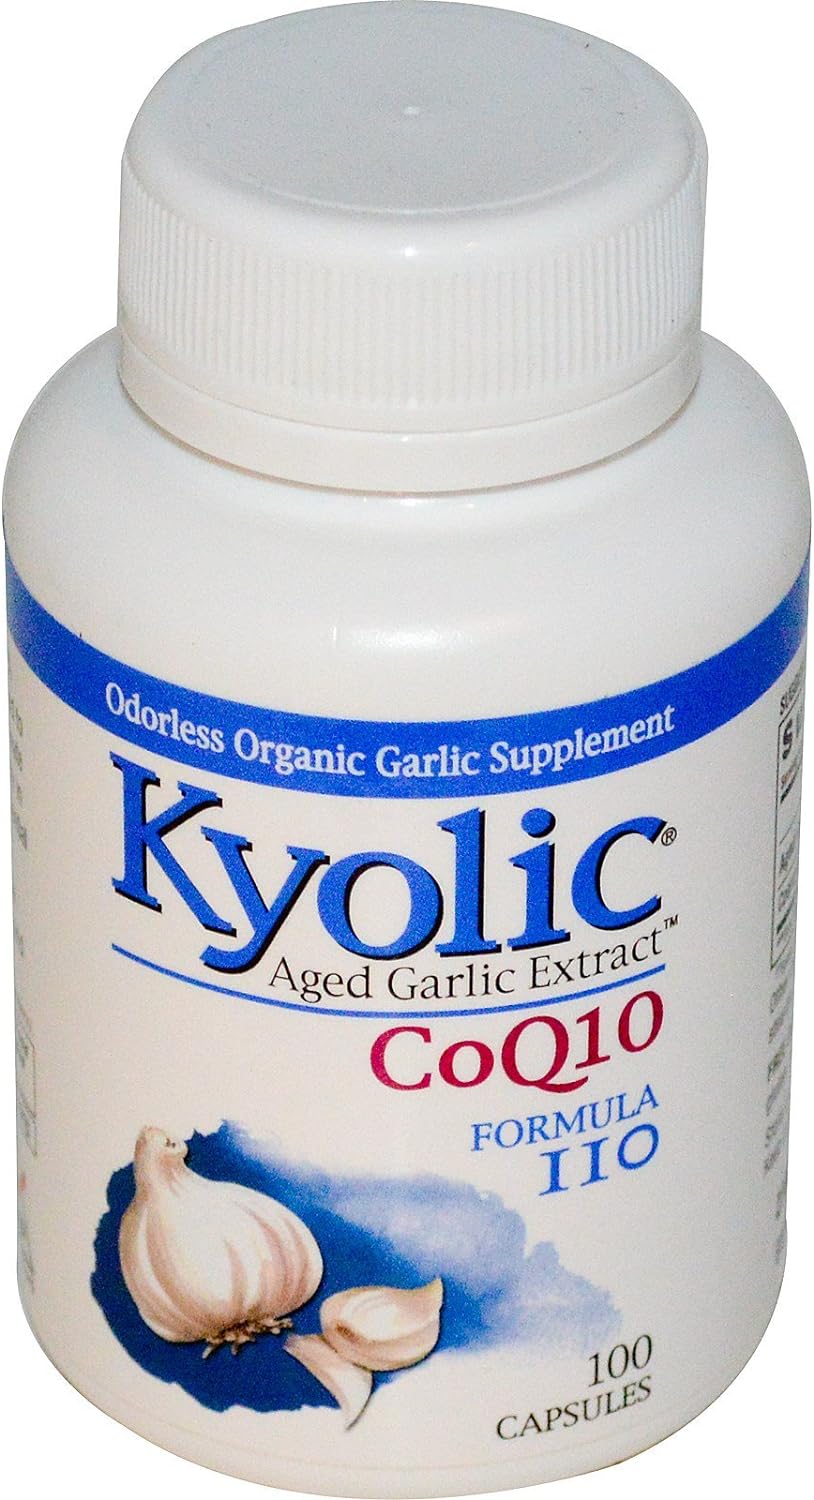 Kyolic Aged Garlic Extract Formula 110 CoQ10 Cardiovascular, 100 Capsules : Health & Household